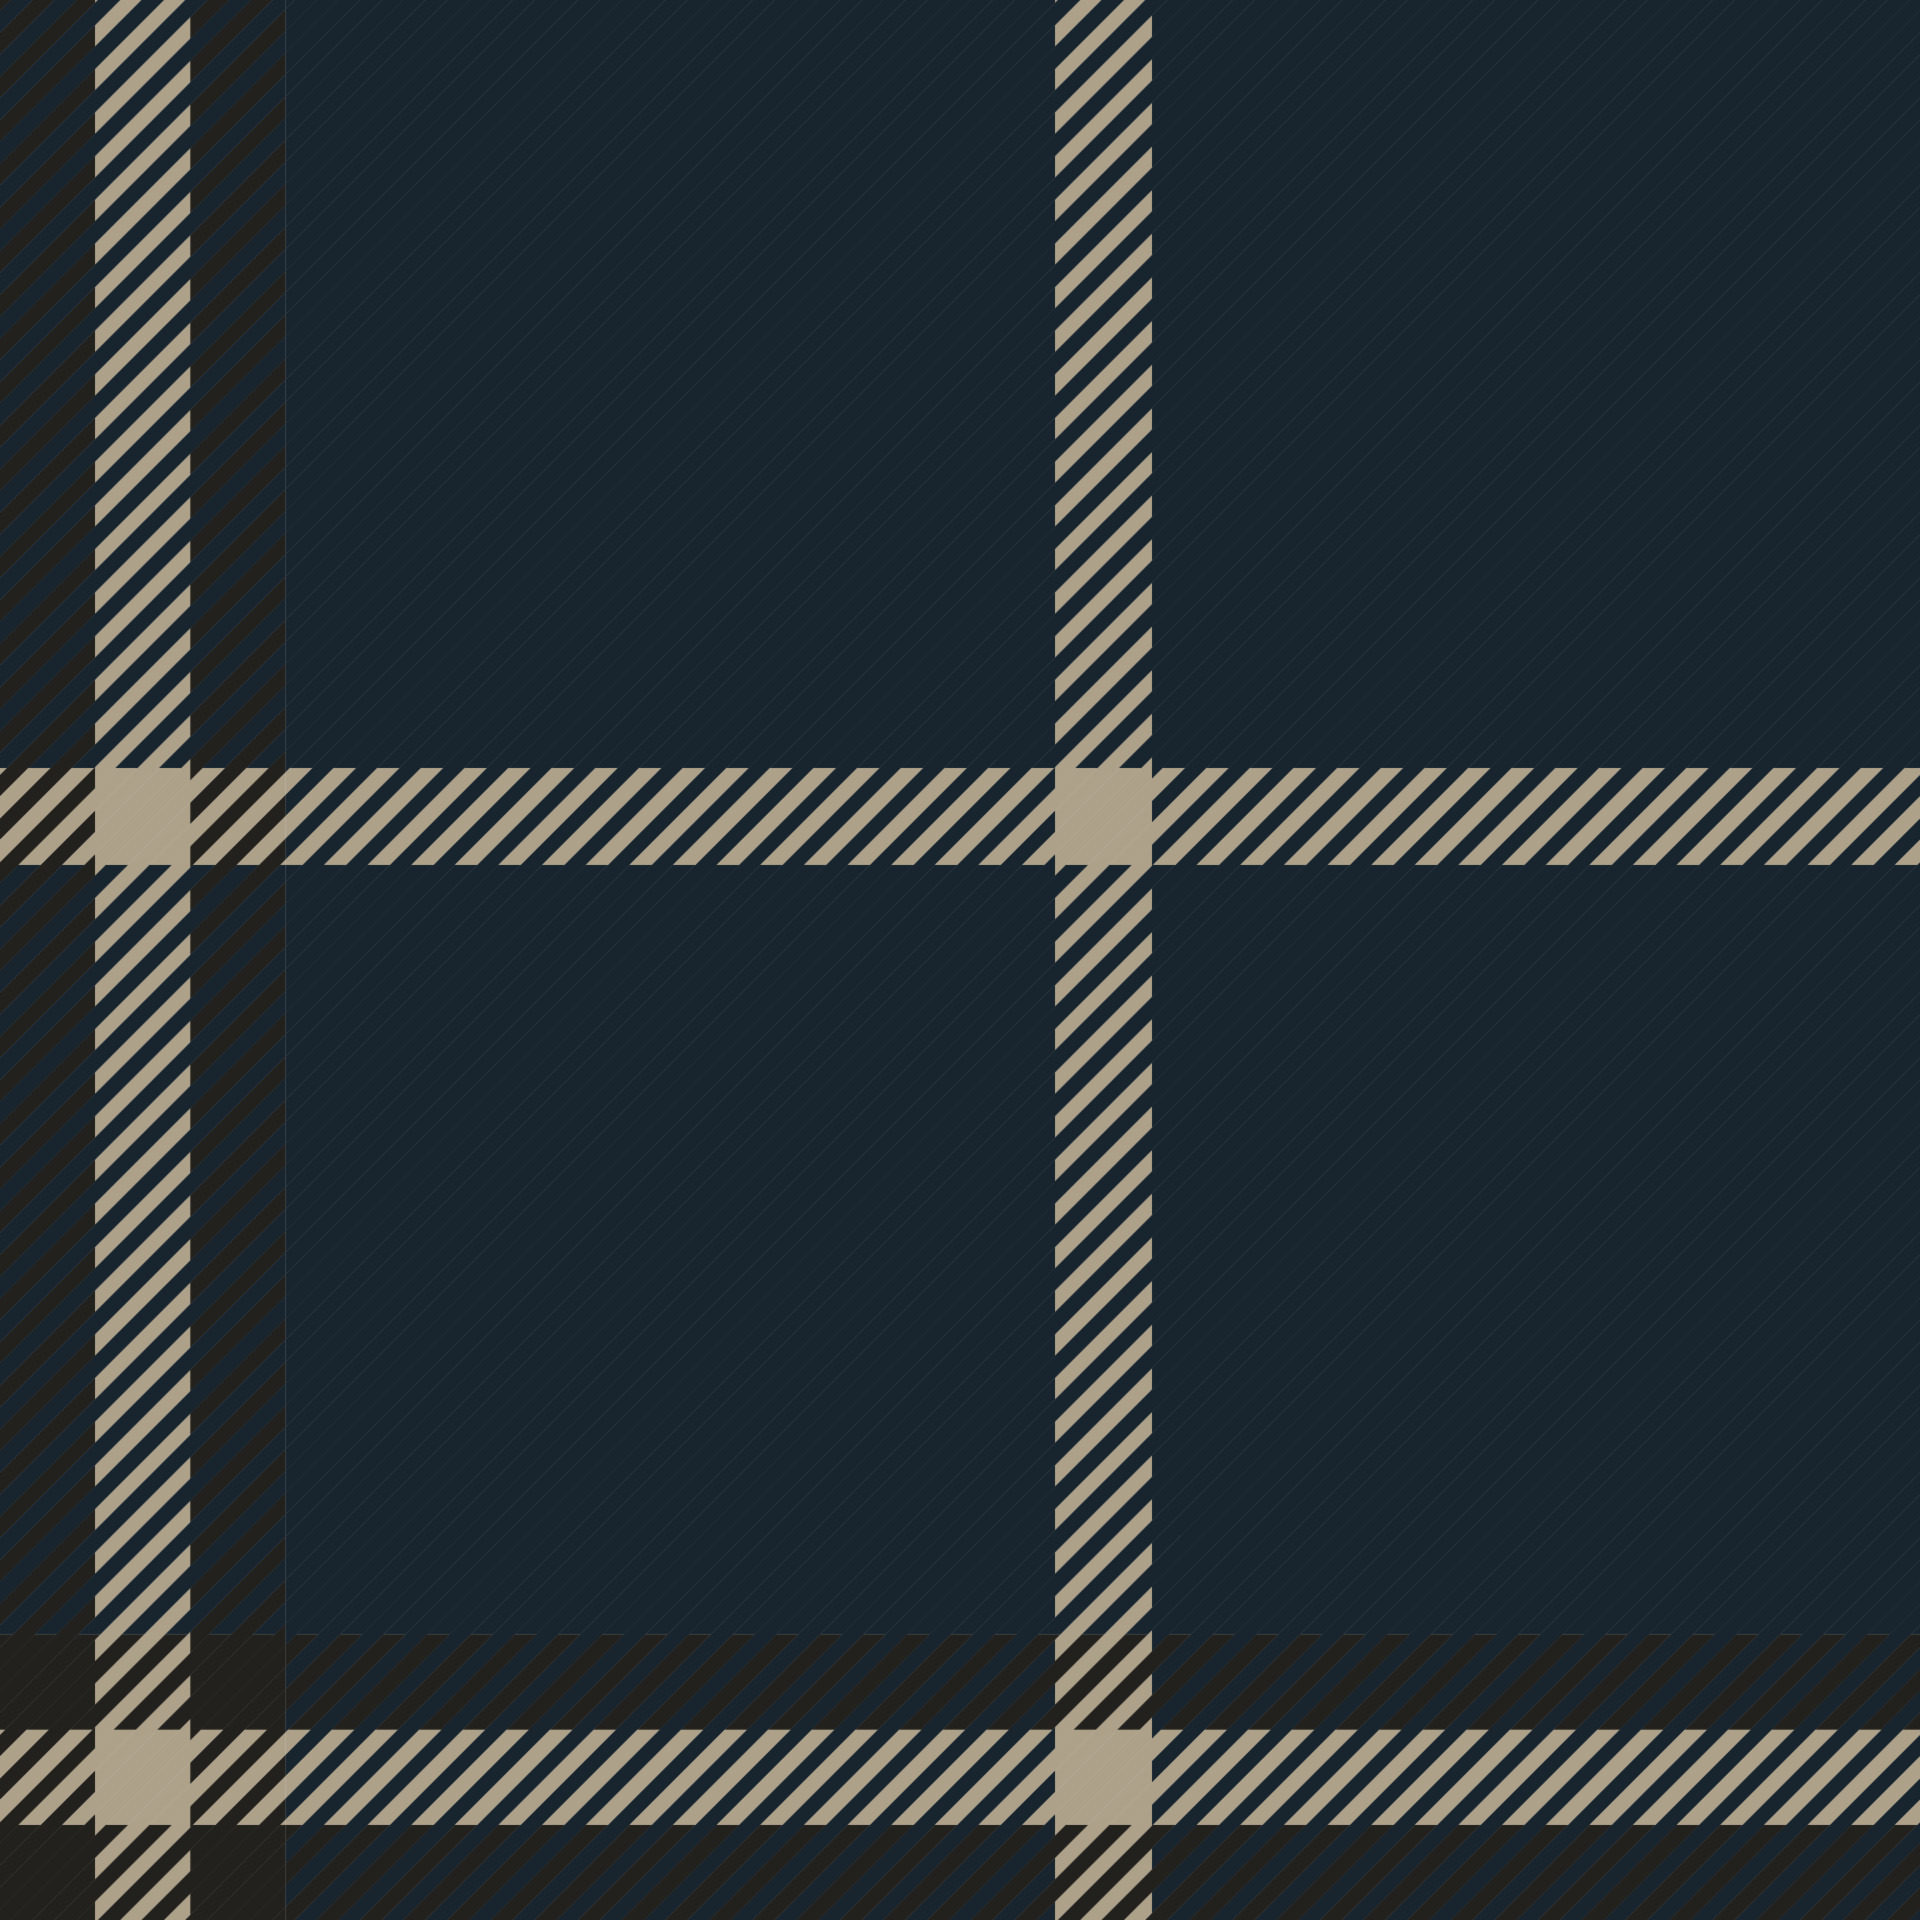 Blue and black tartan plaid seamless pattern Vector Image